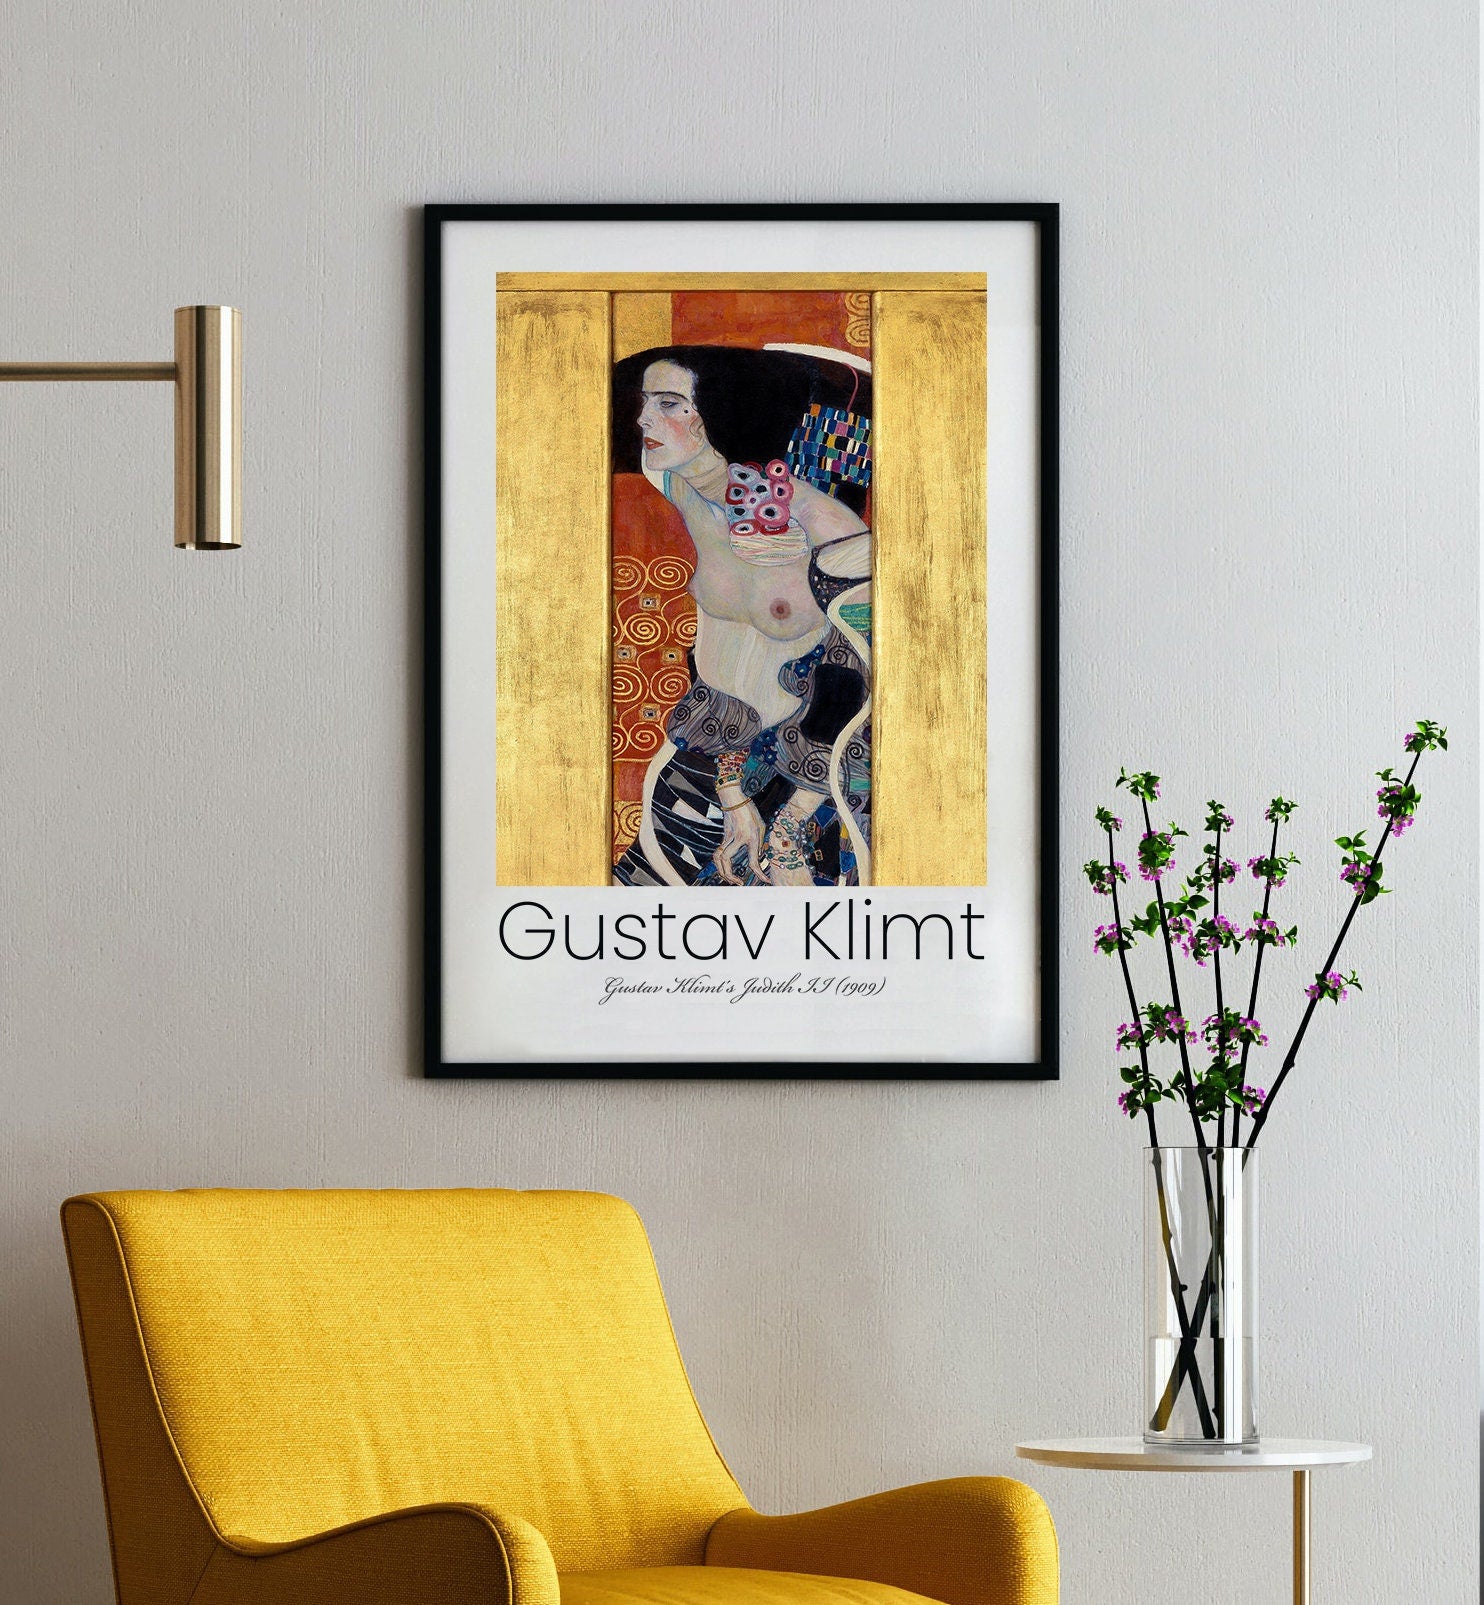 Set of 3 Gustav Klimt, Gustav Klimt Print, Set of 3 Exhibition Prints, Museum Posters